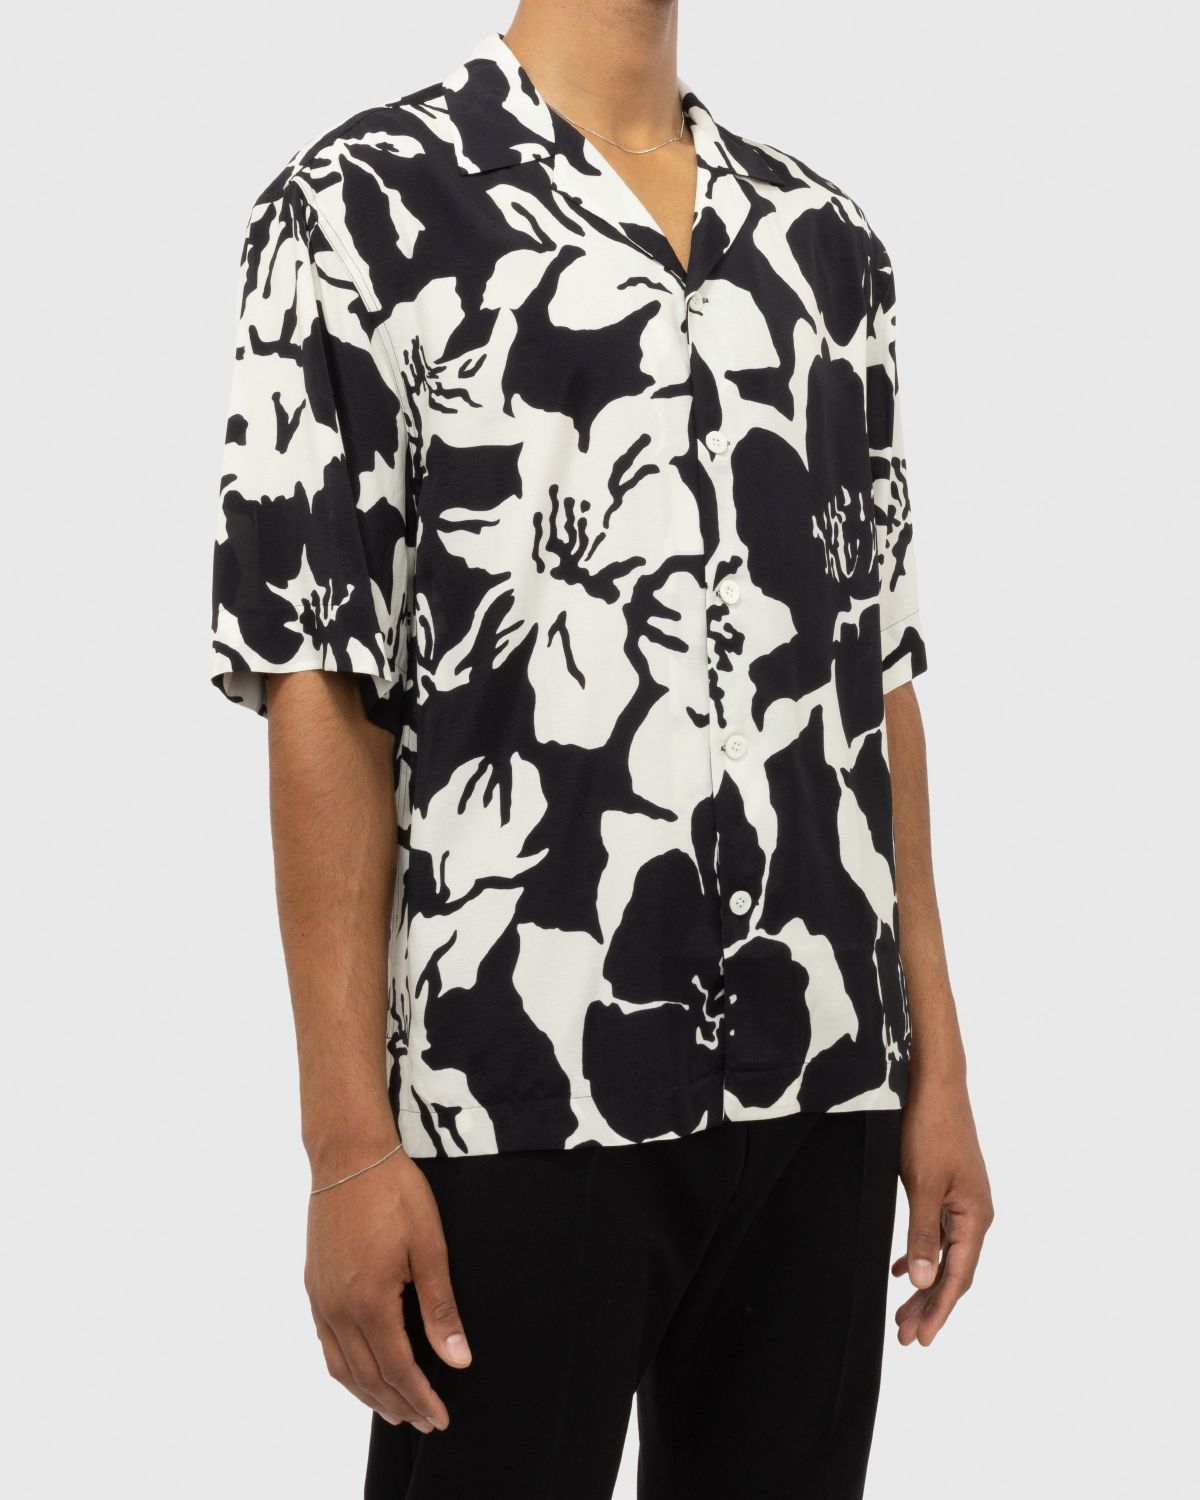 Dries van Noten – Floral Cassi Shirt Multi - Shortsleeve Shirts - Multi - Image 3